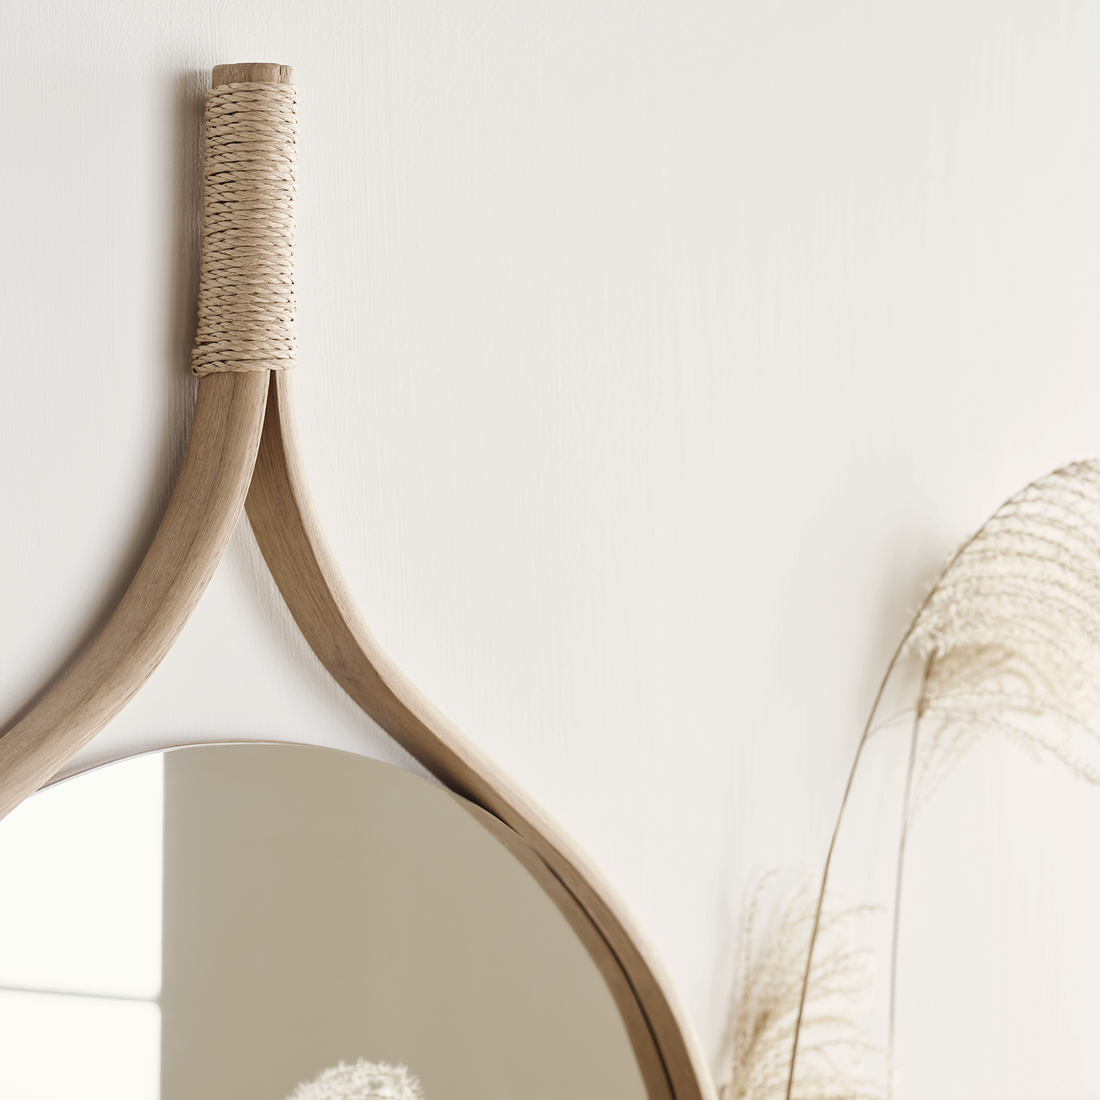 Racquet | Round Wall Mirror